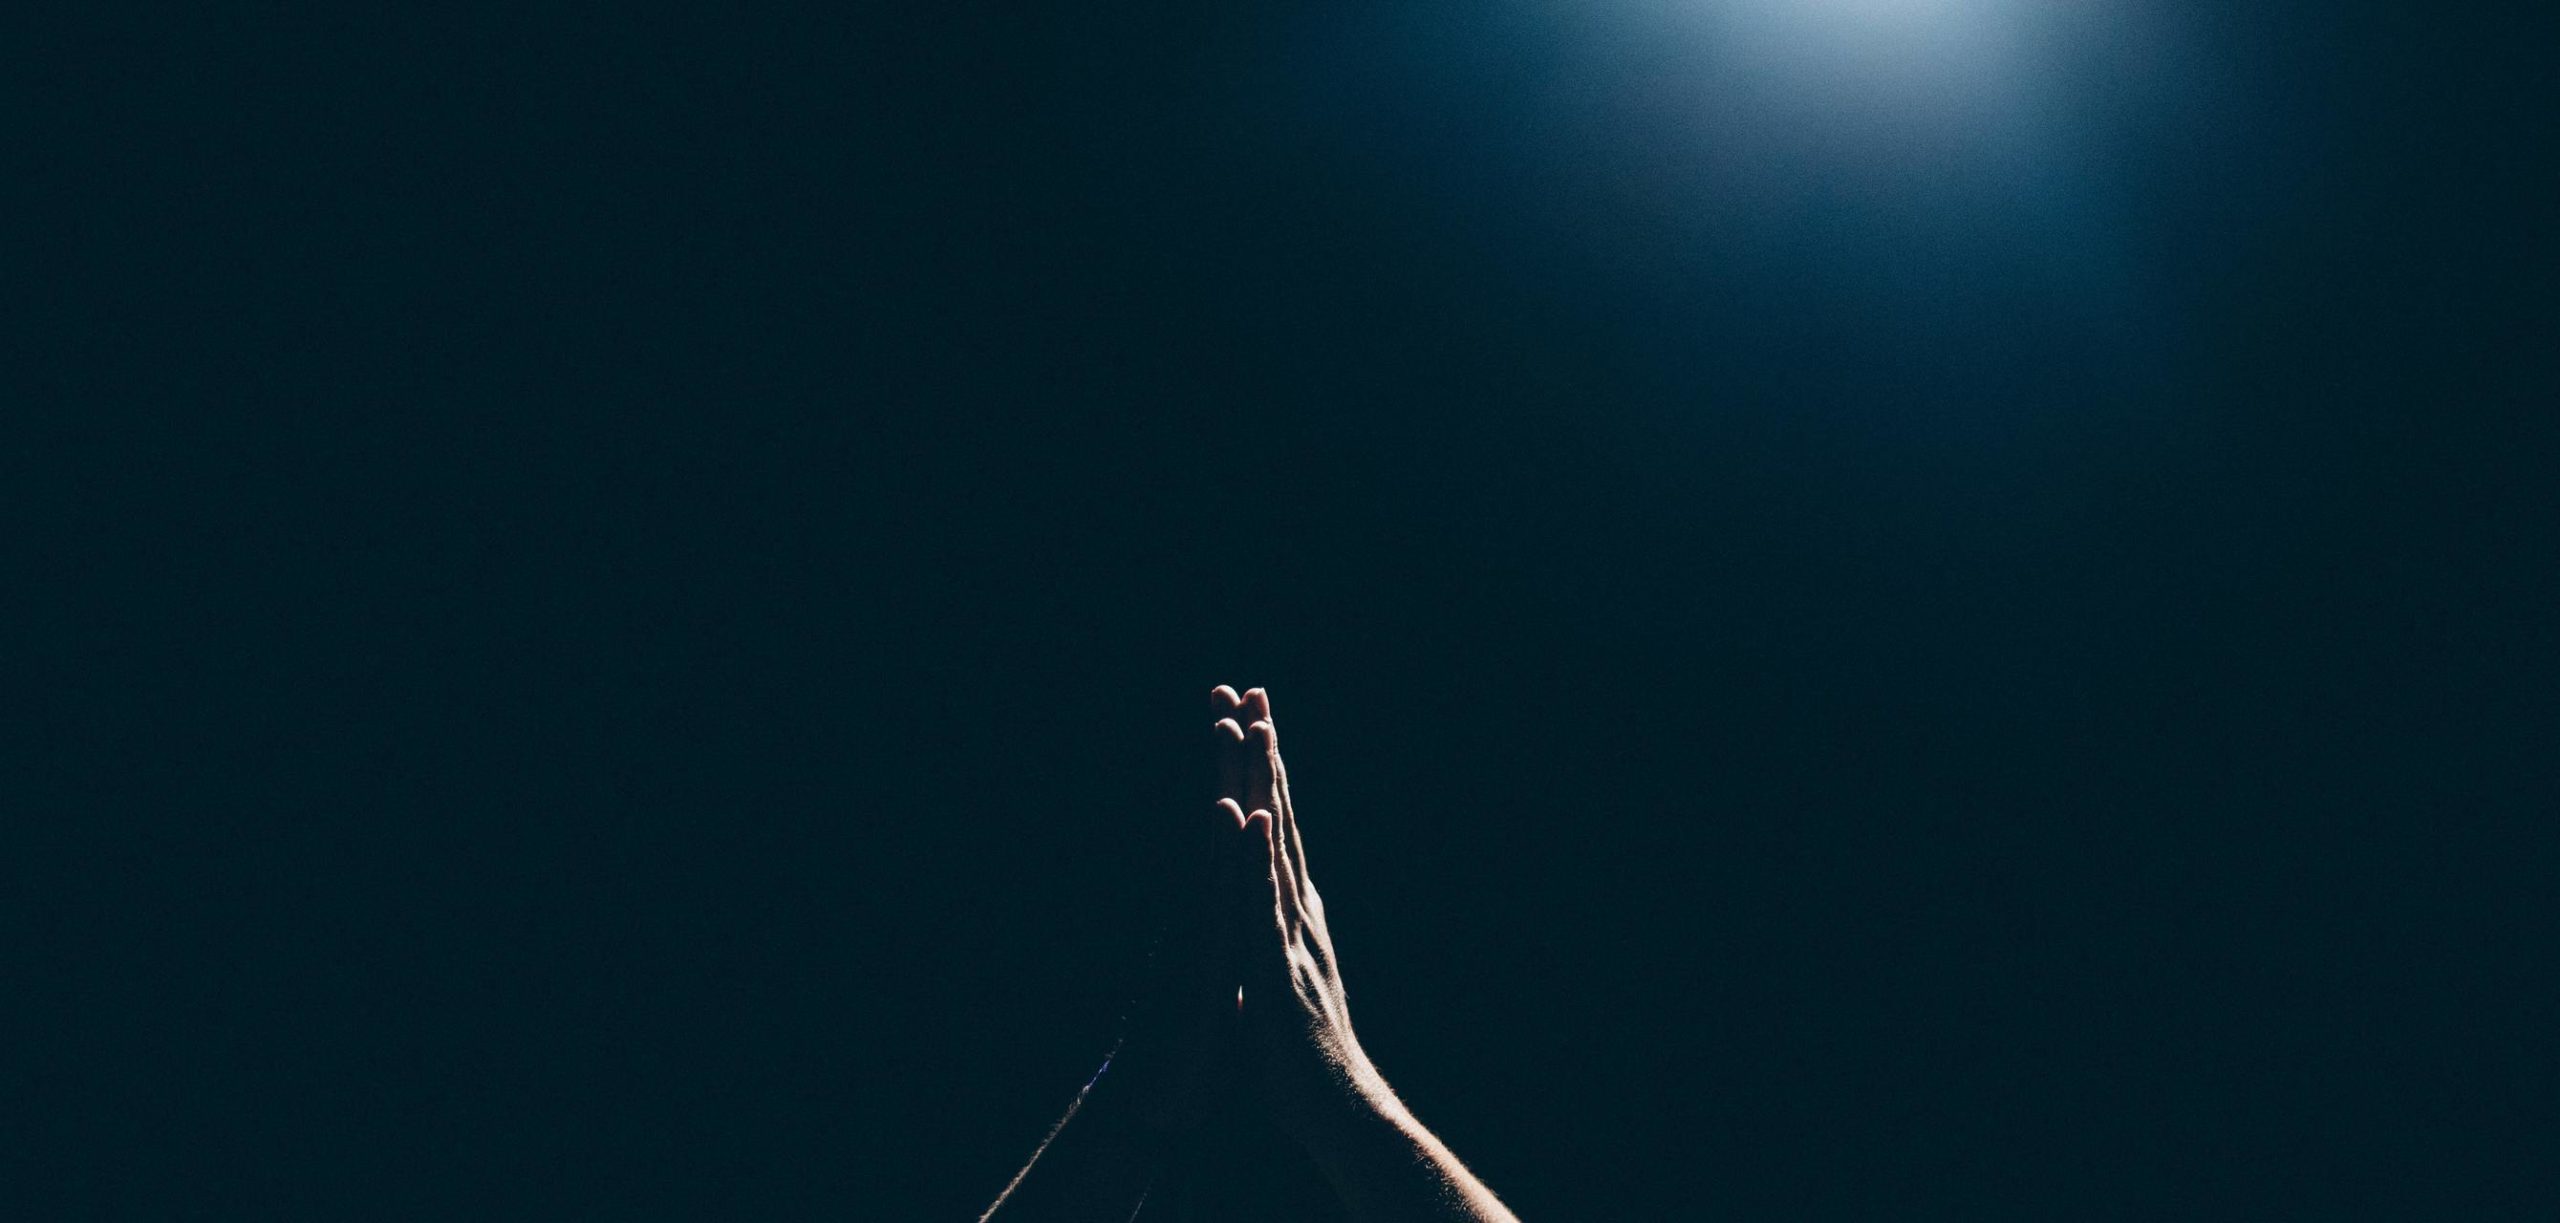 hands folded in prayer against a dark backdrop